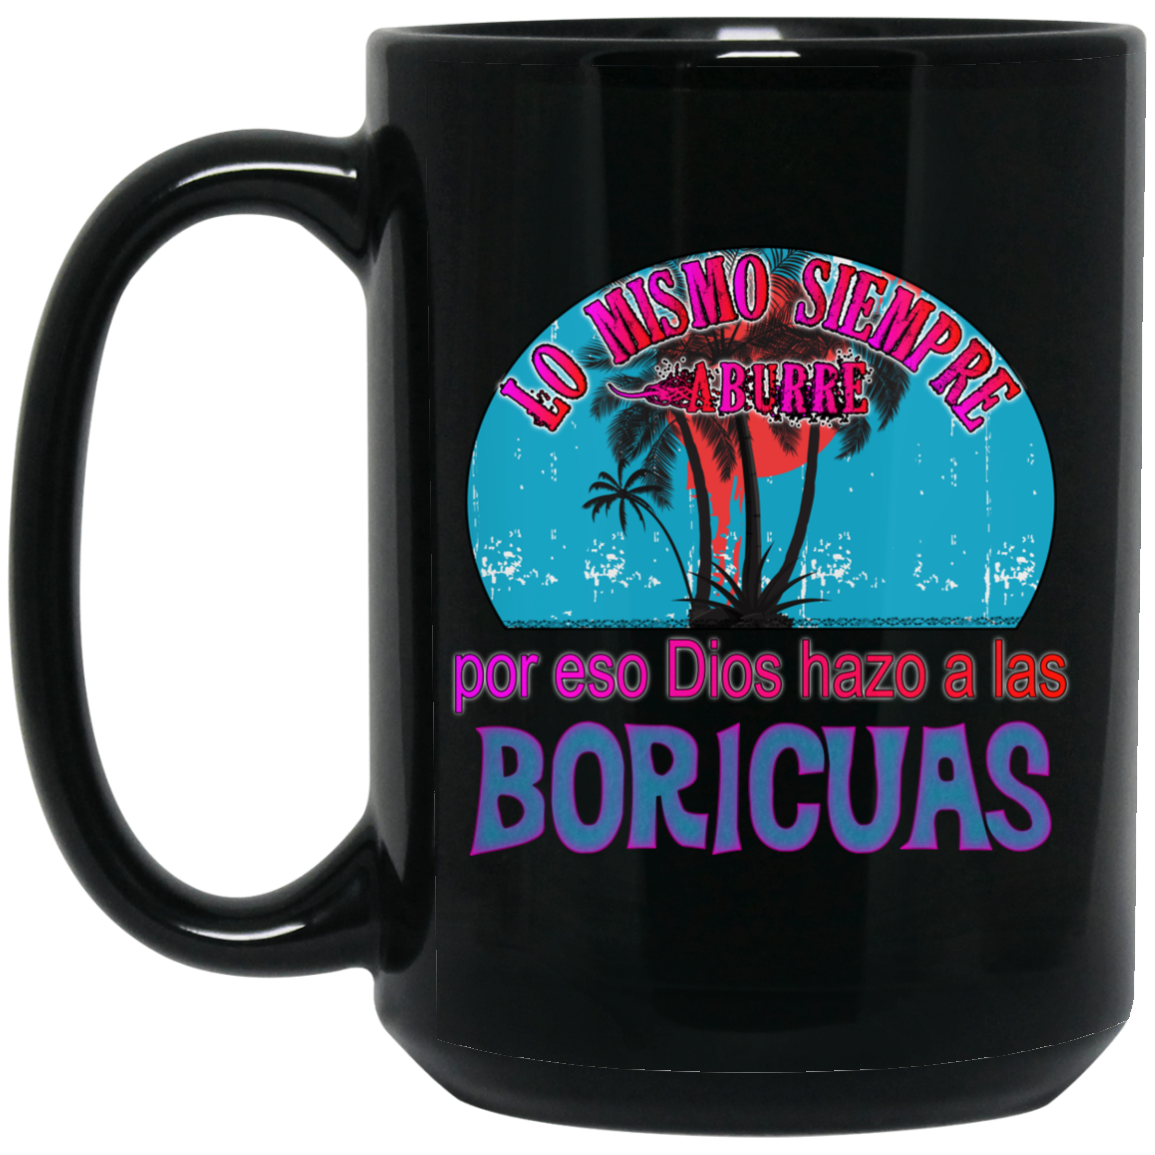 Boricuas Were Made to Avoid Boredom - 15 oz. Black Mug